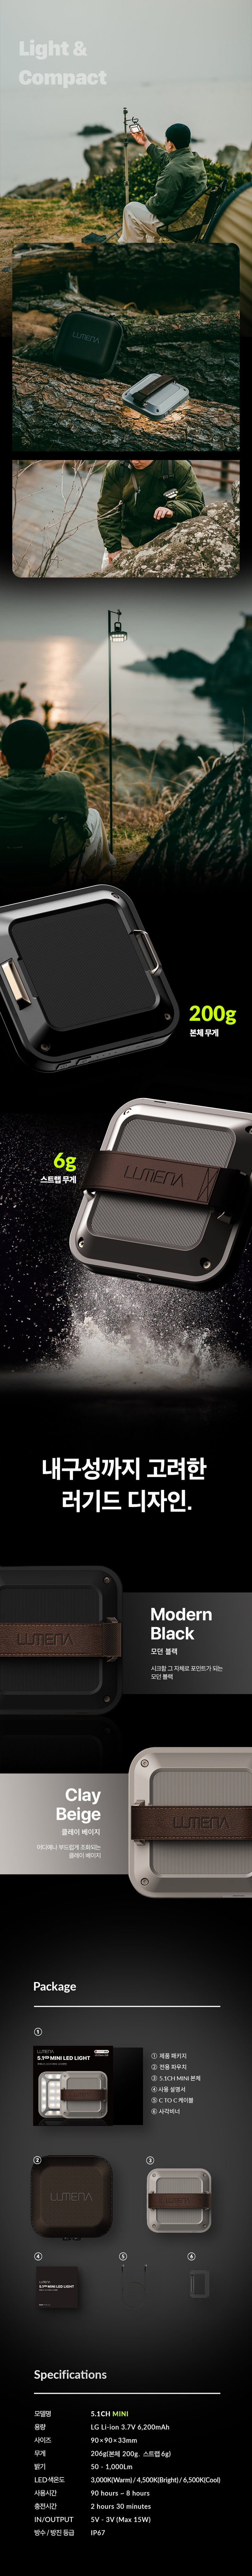 Lumena - N9 5.1CH MINI LED Light Power Bank Lighting LED Light | Camping Light | Spotlight | Waterproof Light